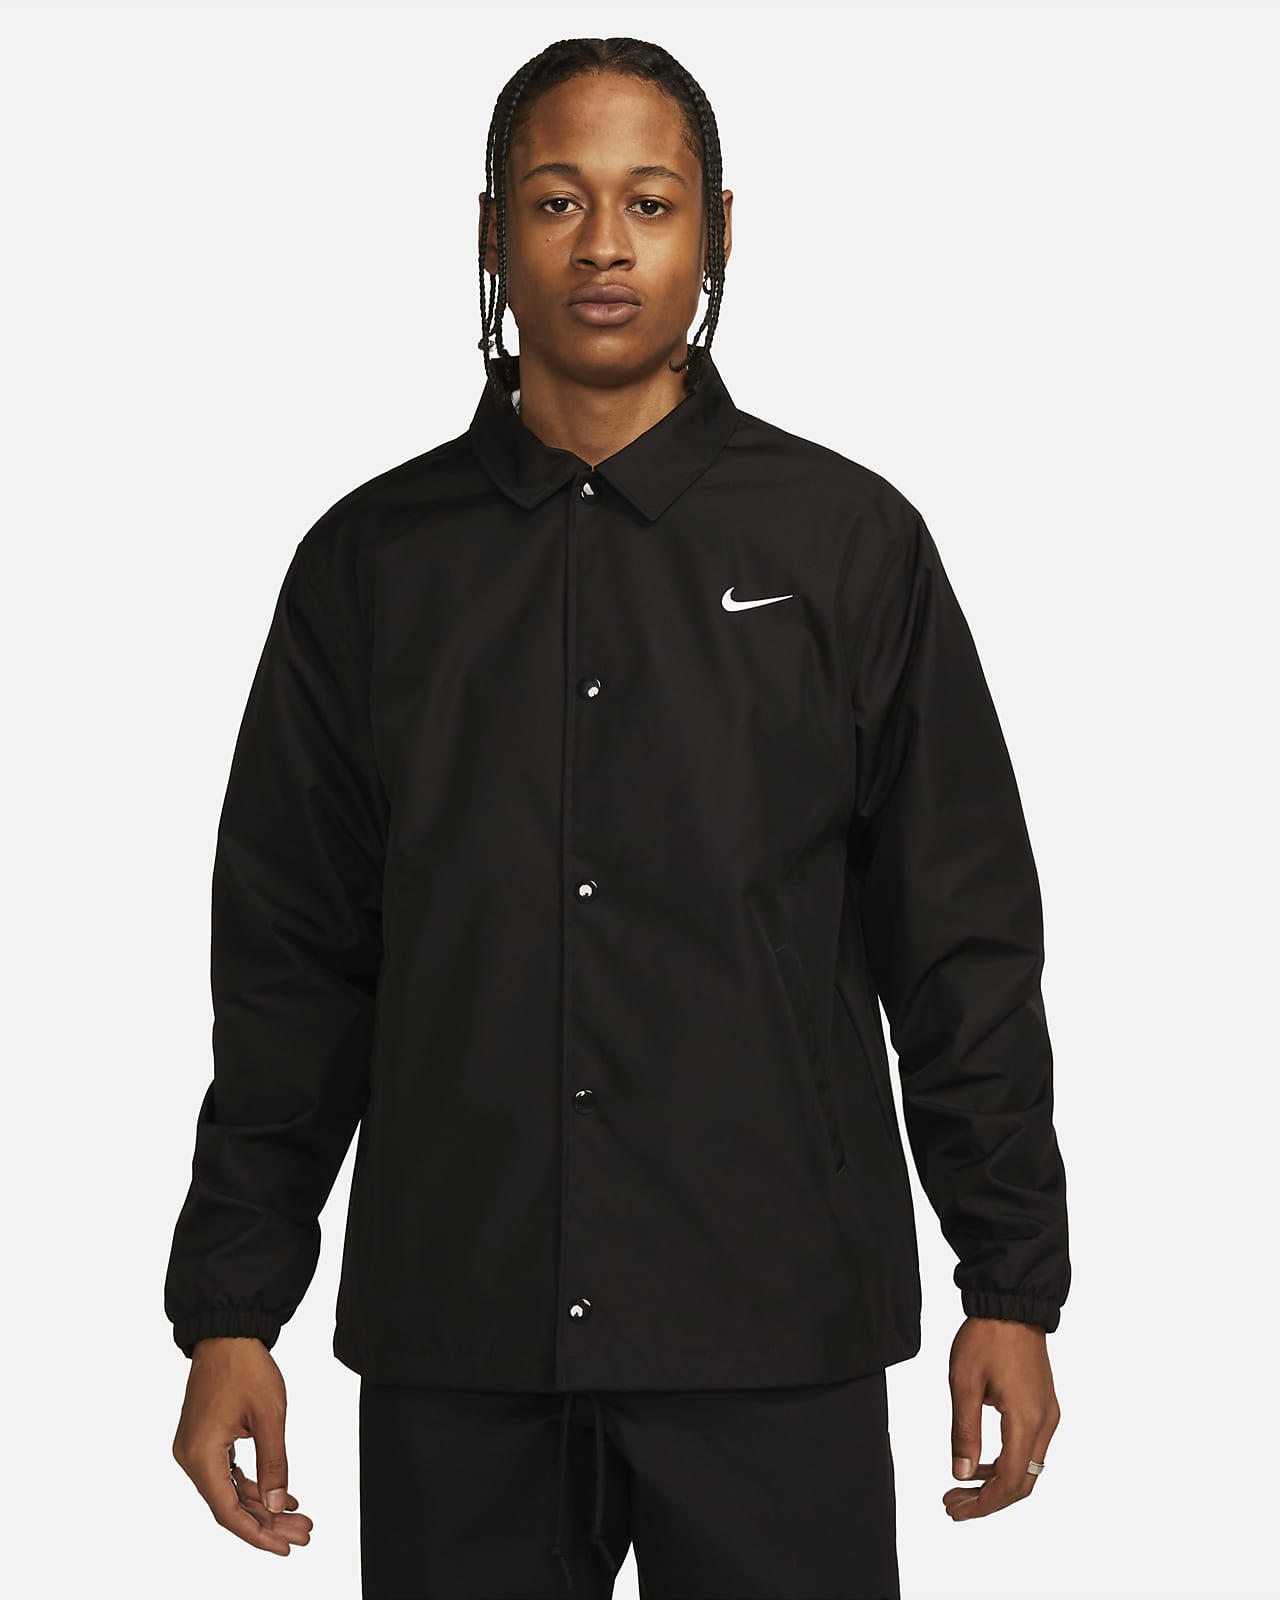 Nike Authentics Men's Lined Coaches Jacket. Nike.com